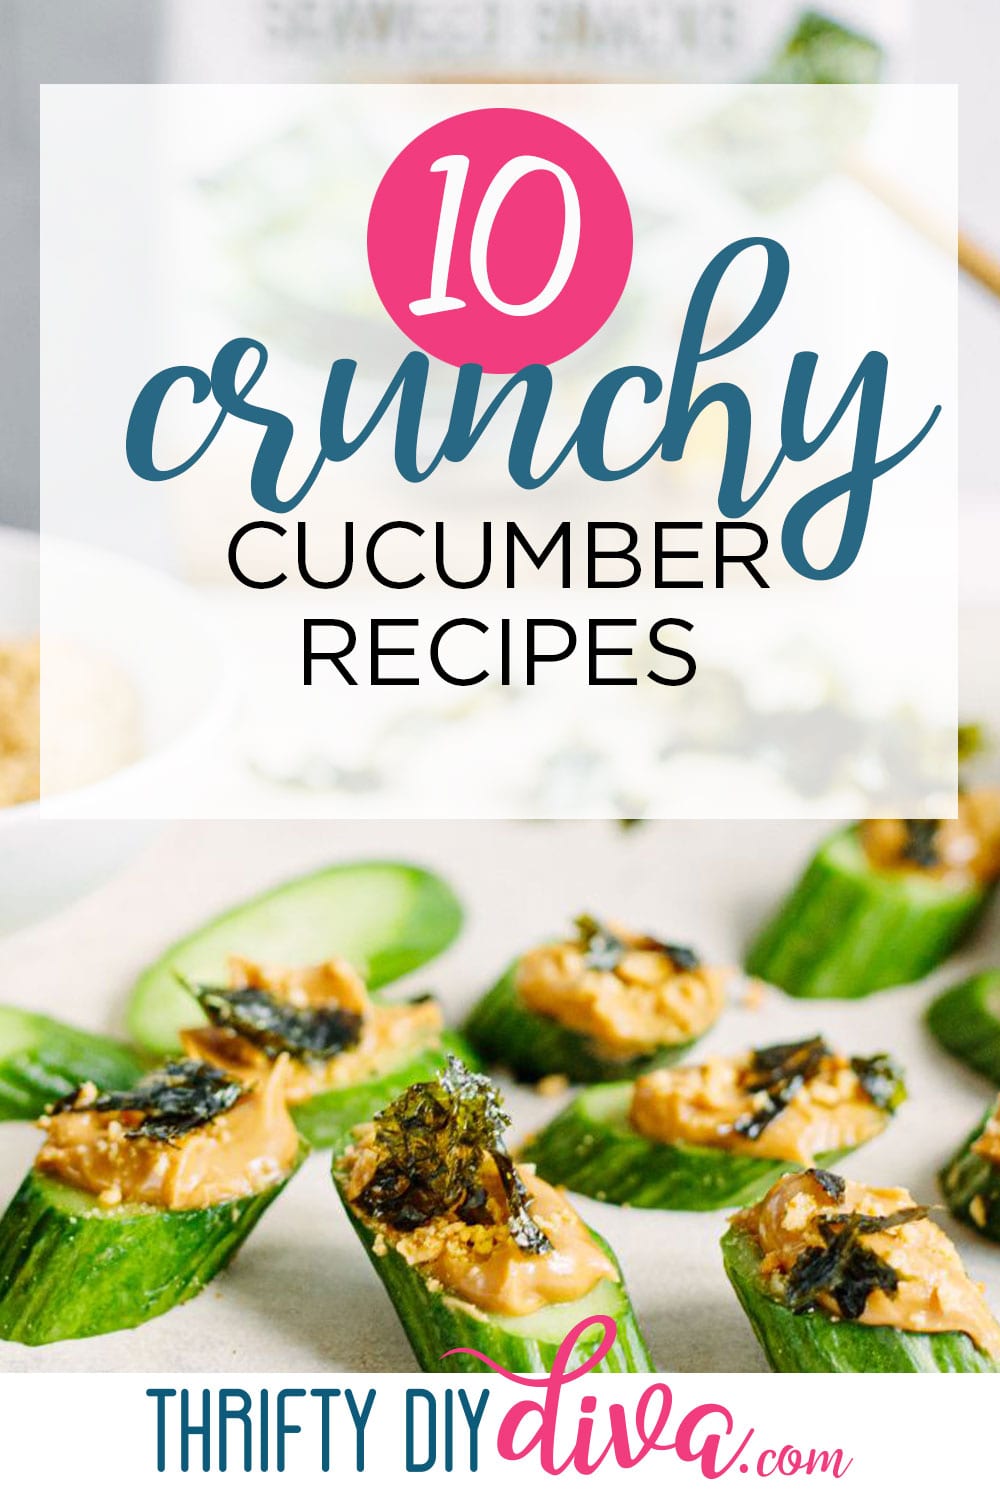 10 Crunchy Cucumber Recipes